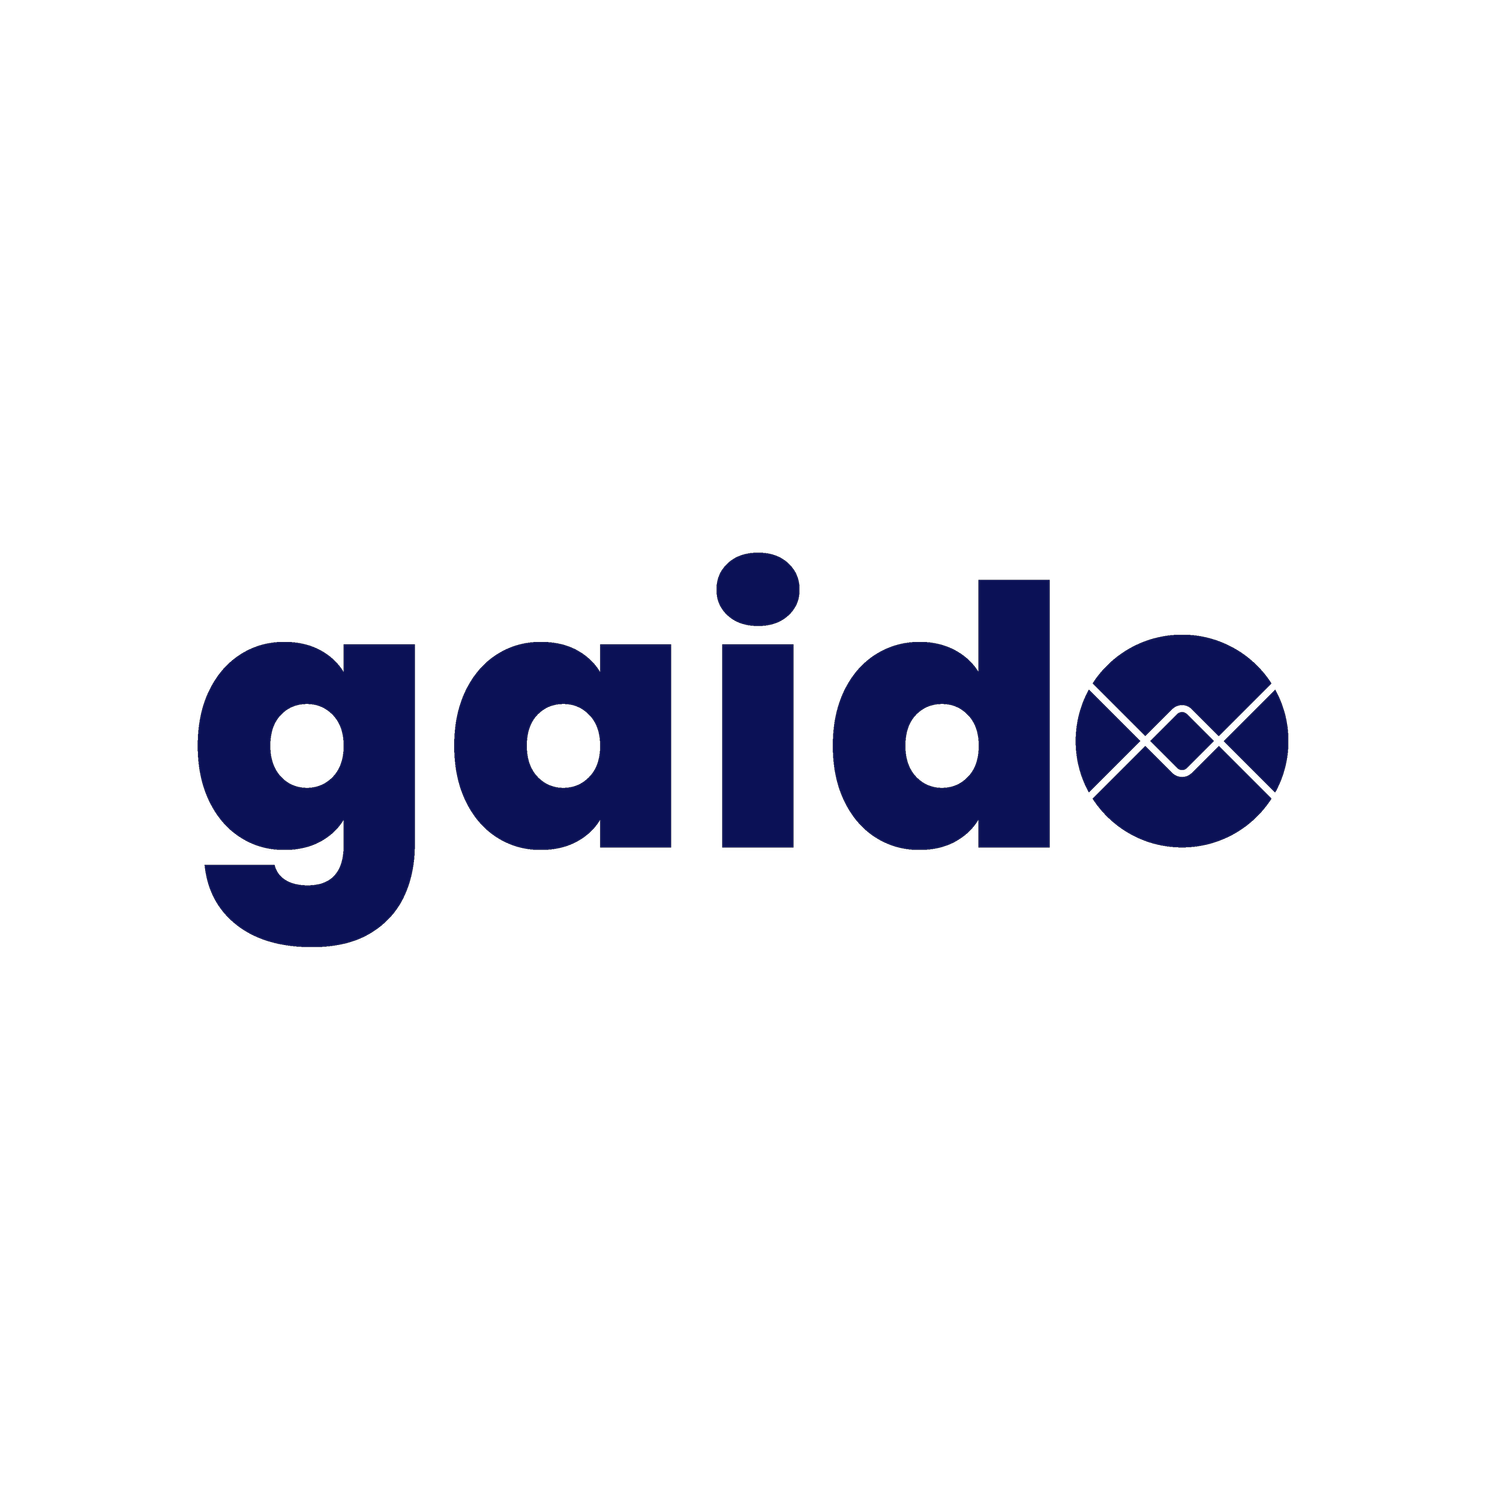 Gaido leadership coaching and advisory